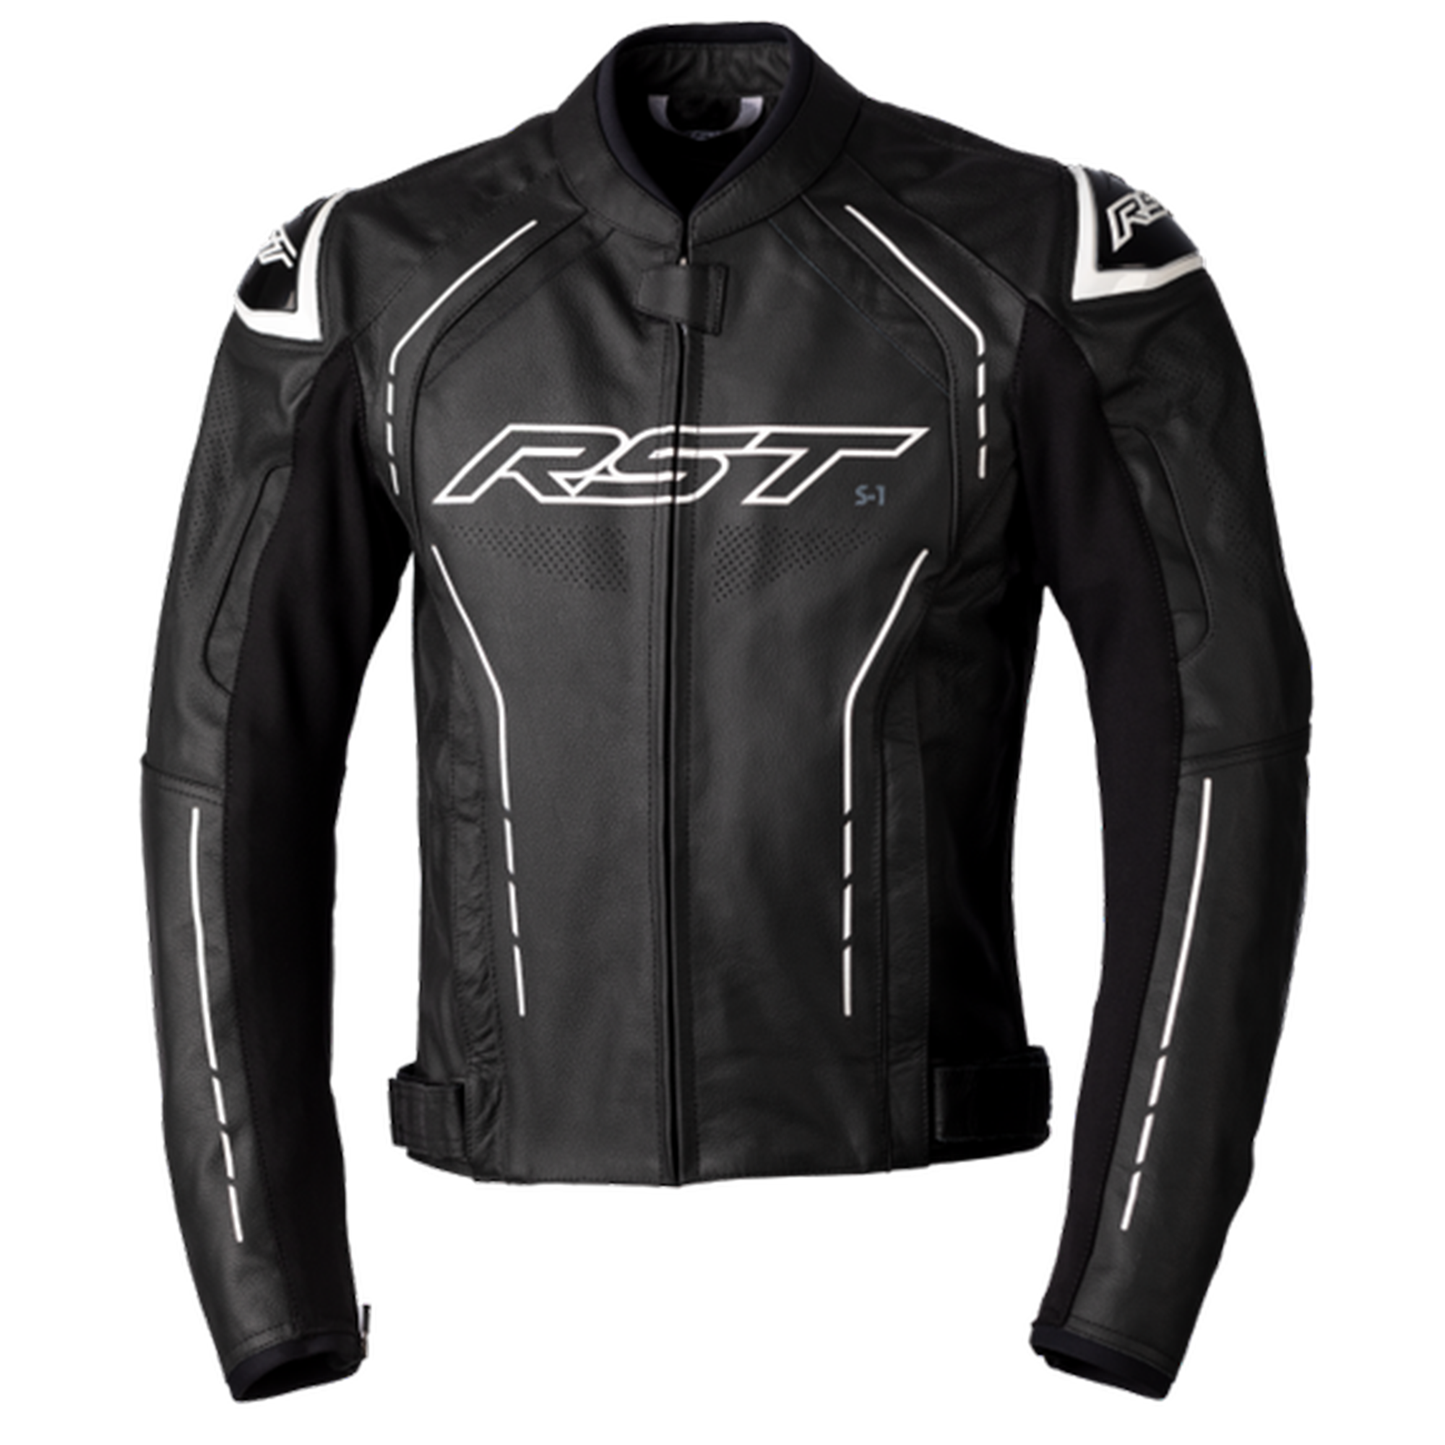 RST S1 (CE) Men's Leather Jacket - Black/White (2977)